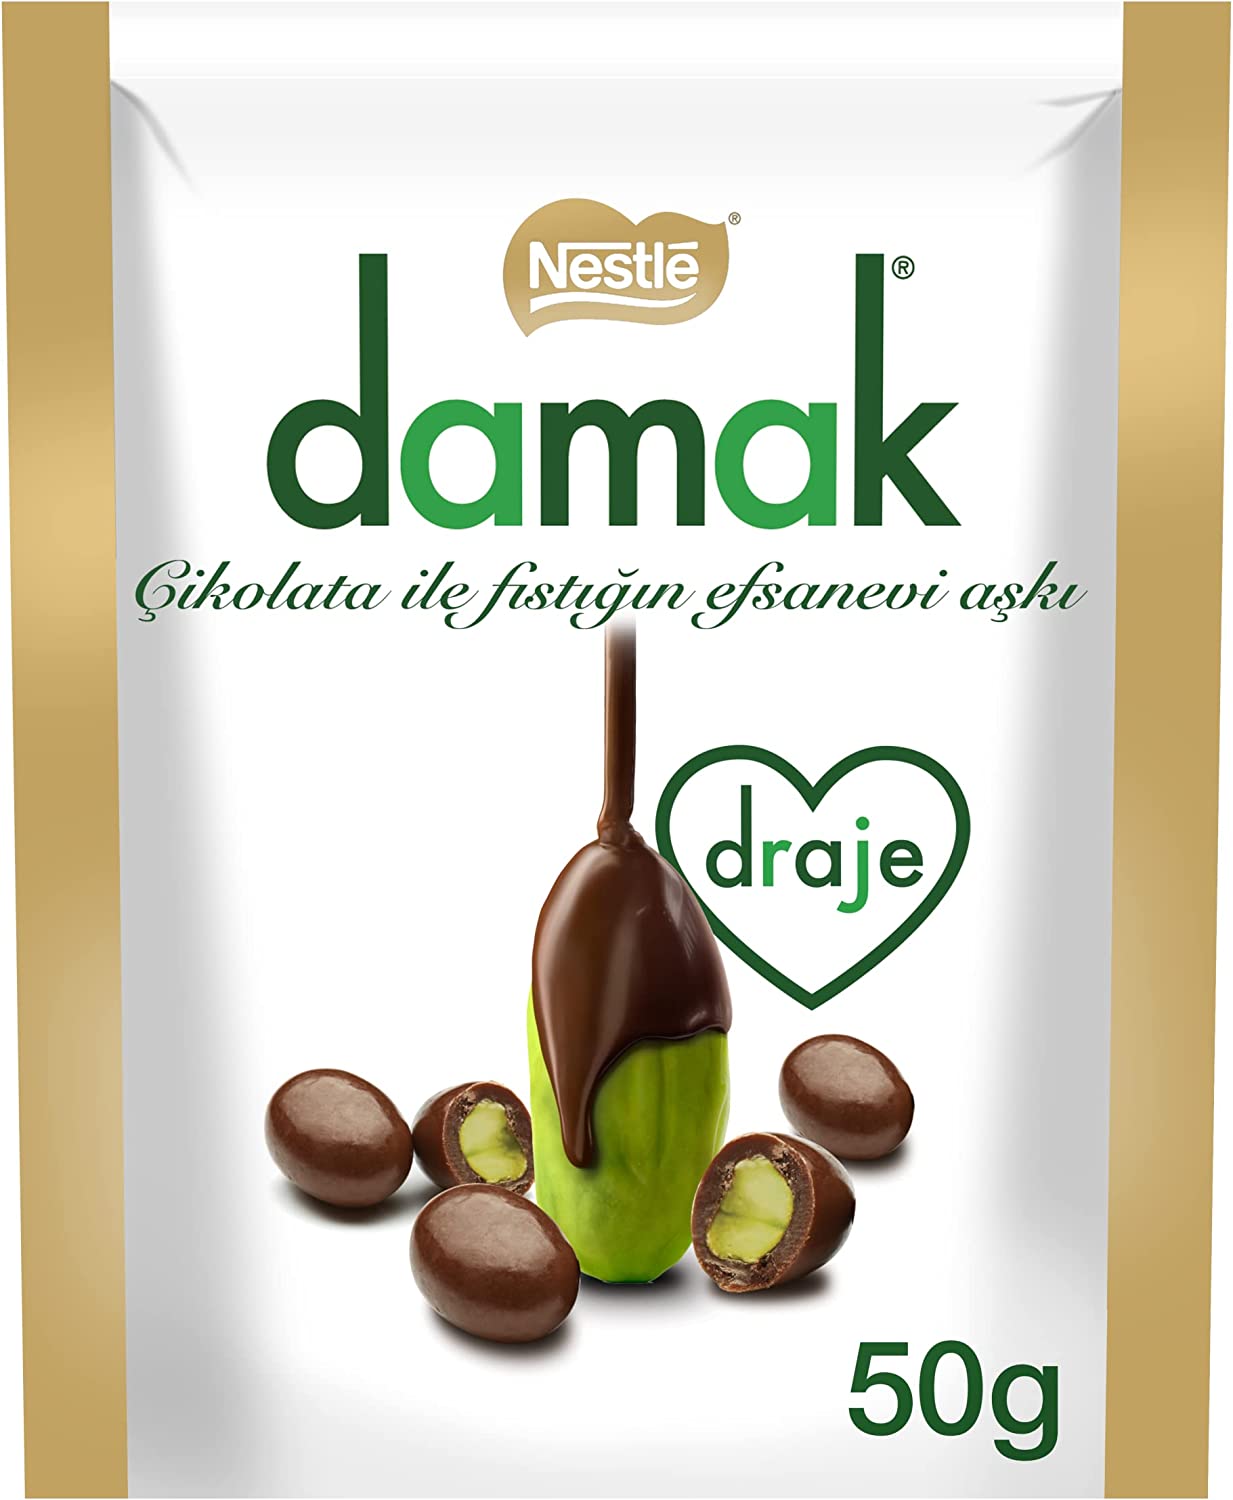 Chocolates Nestlé Uruguay